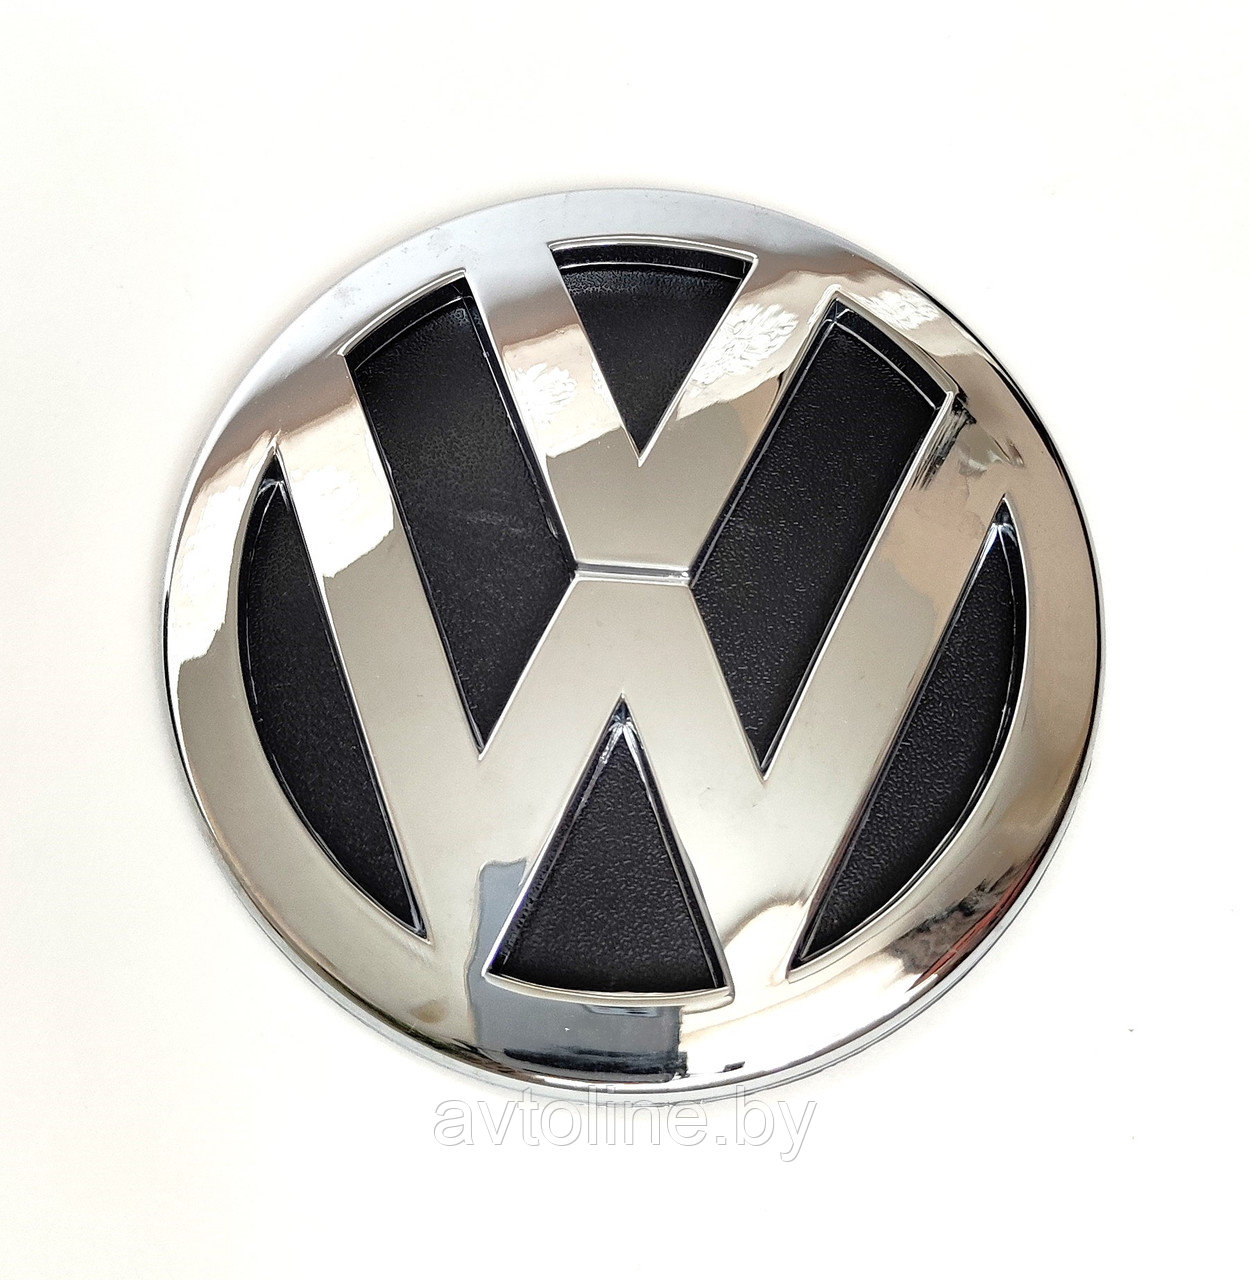 Эмблема задняя VW Polo 2002-2005 (105 мм, скотч) EL-POLO1, фото 1